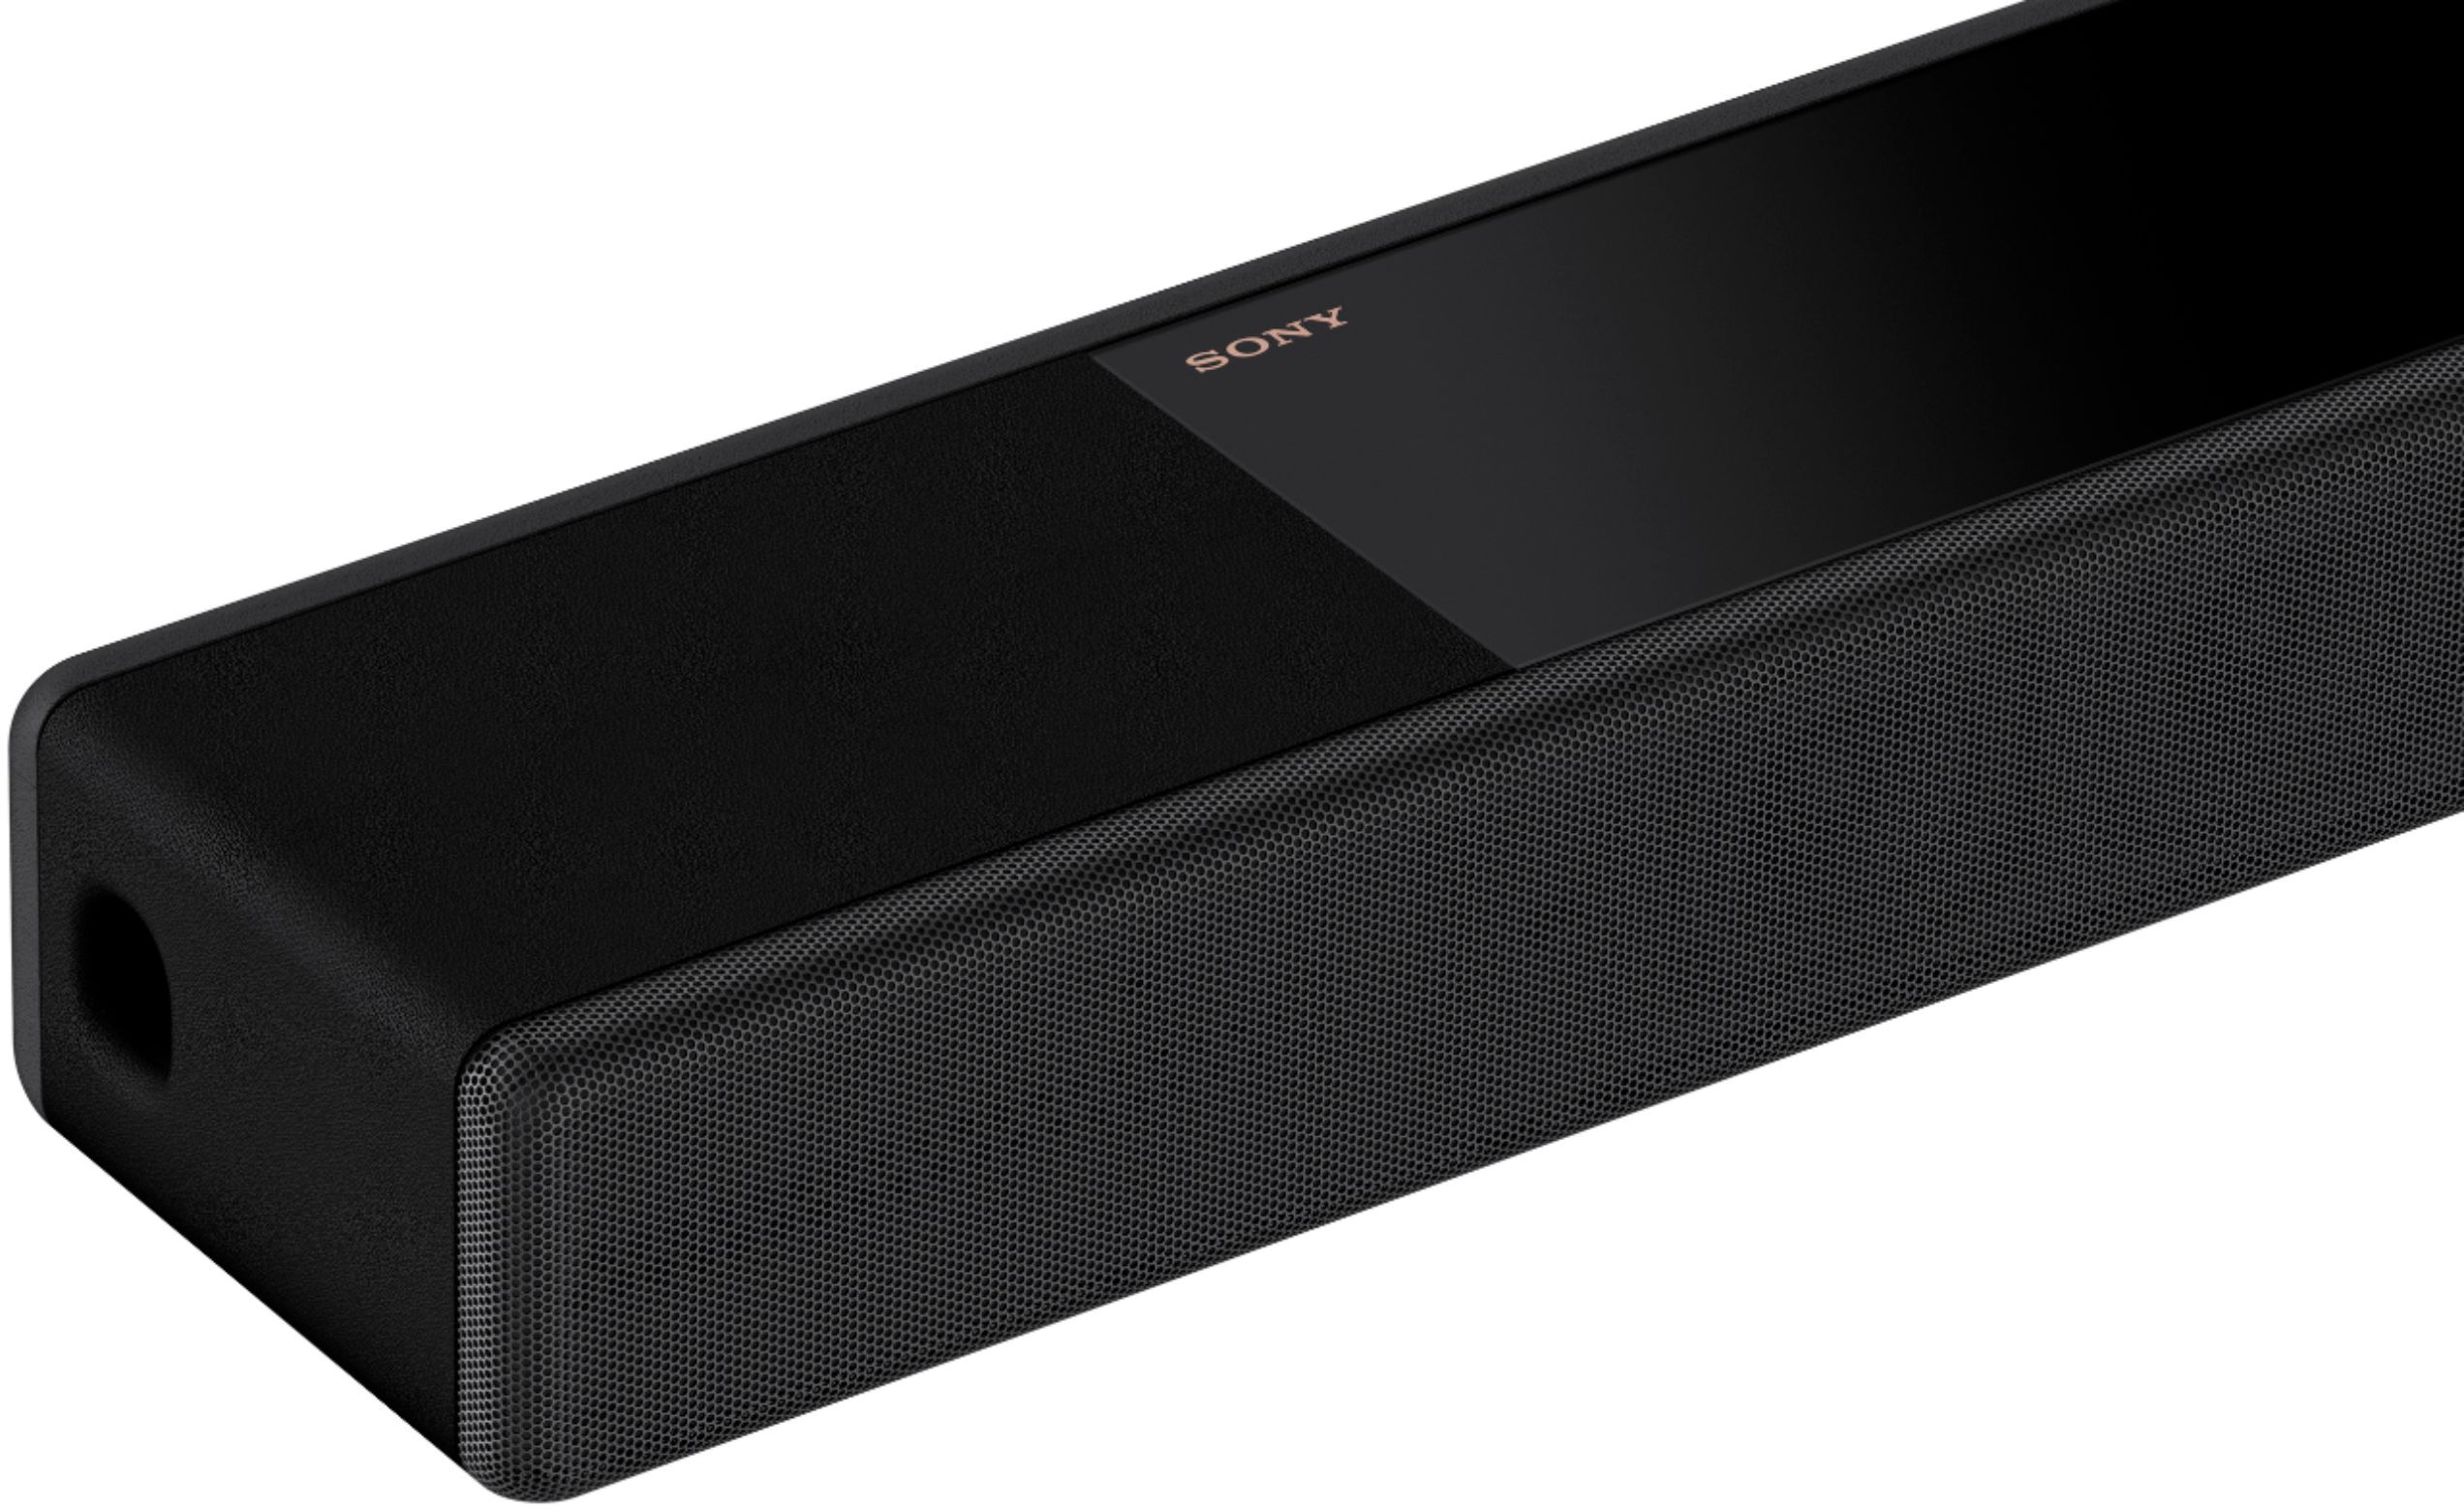 Buy Atmos - Channel HTA7000 Dolby Sony with HT-A7000 Black Soundbar Best 7.1.2